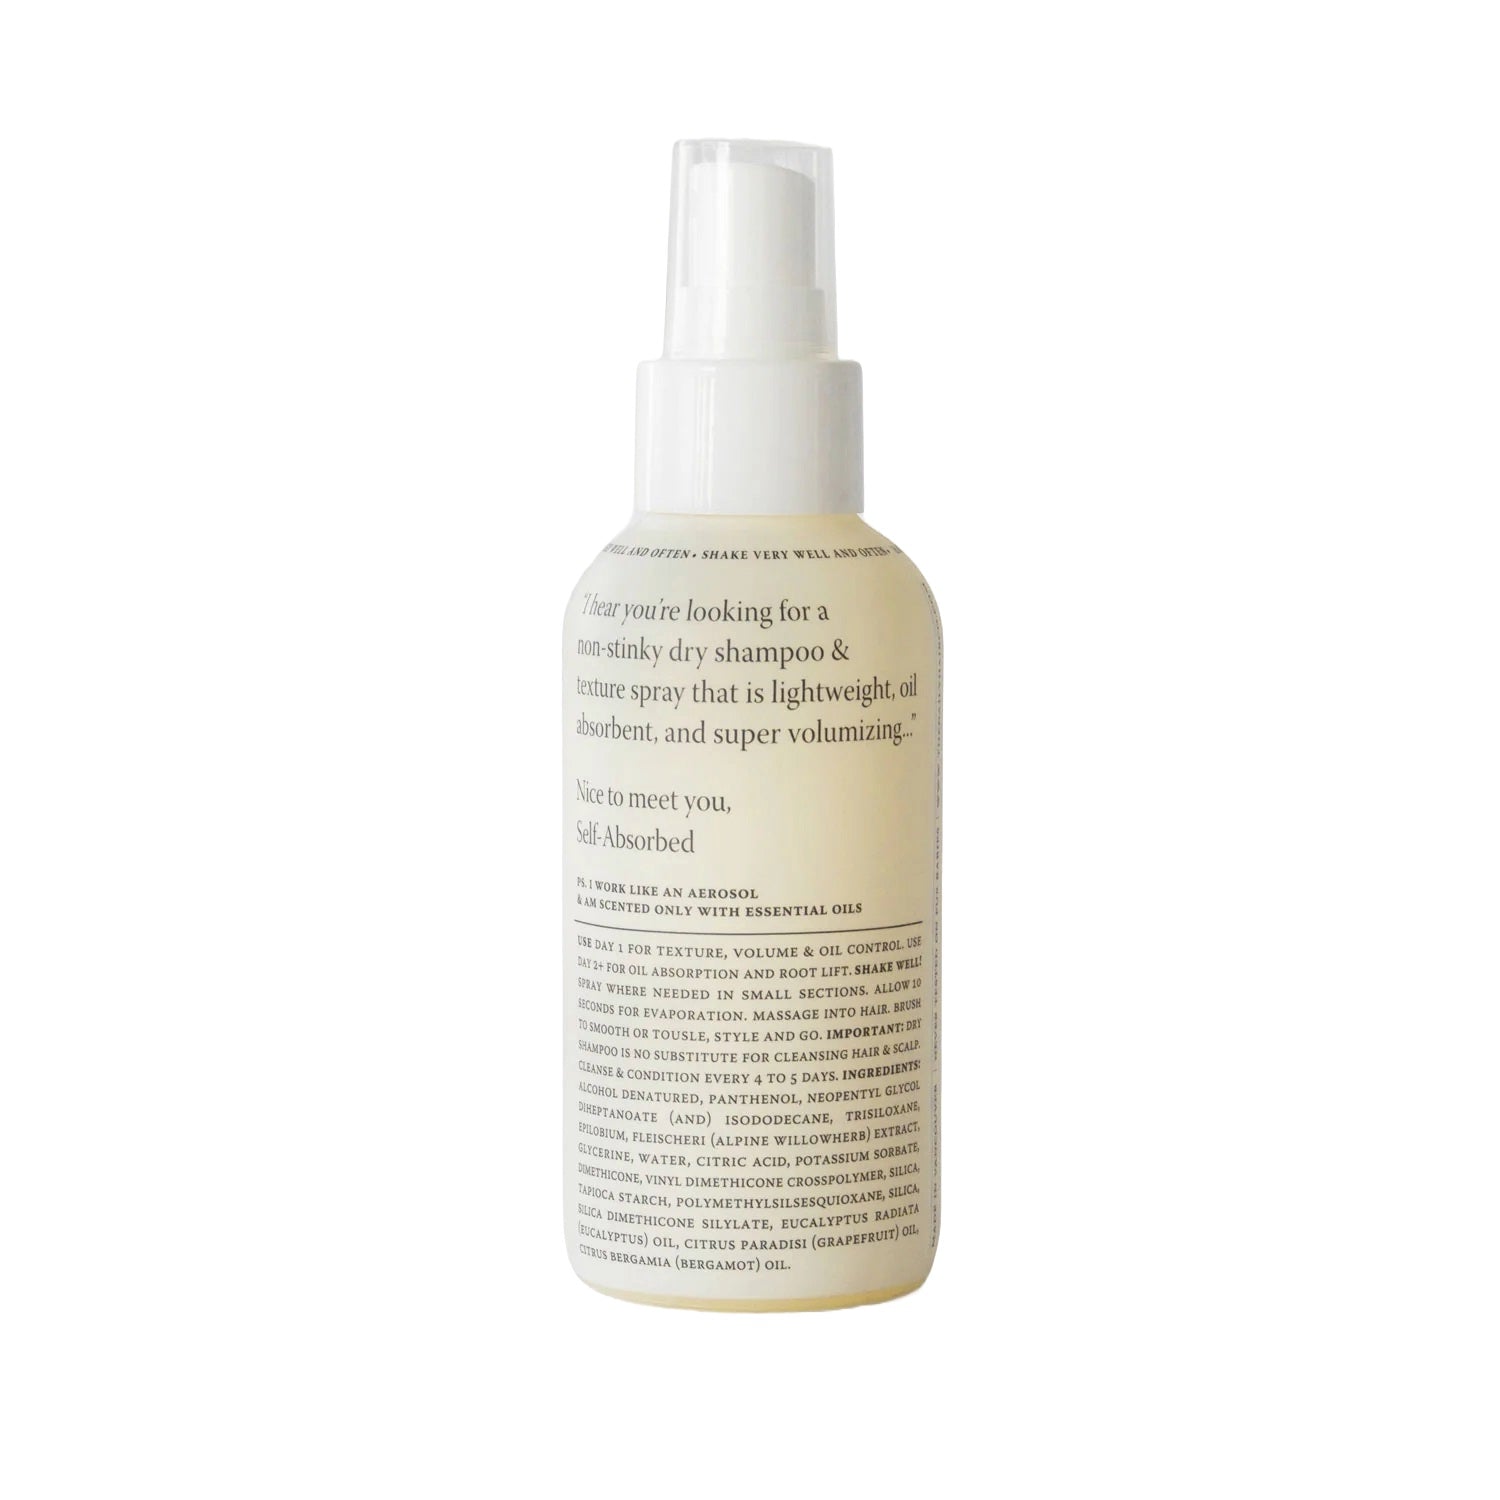 THE DAILY HAIR COMPANY Self-Absorbed Dry Shampoo + Texture Spray